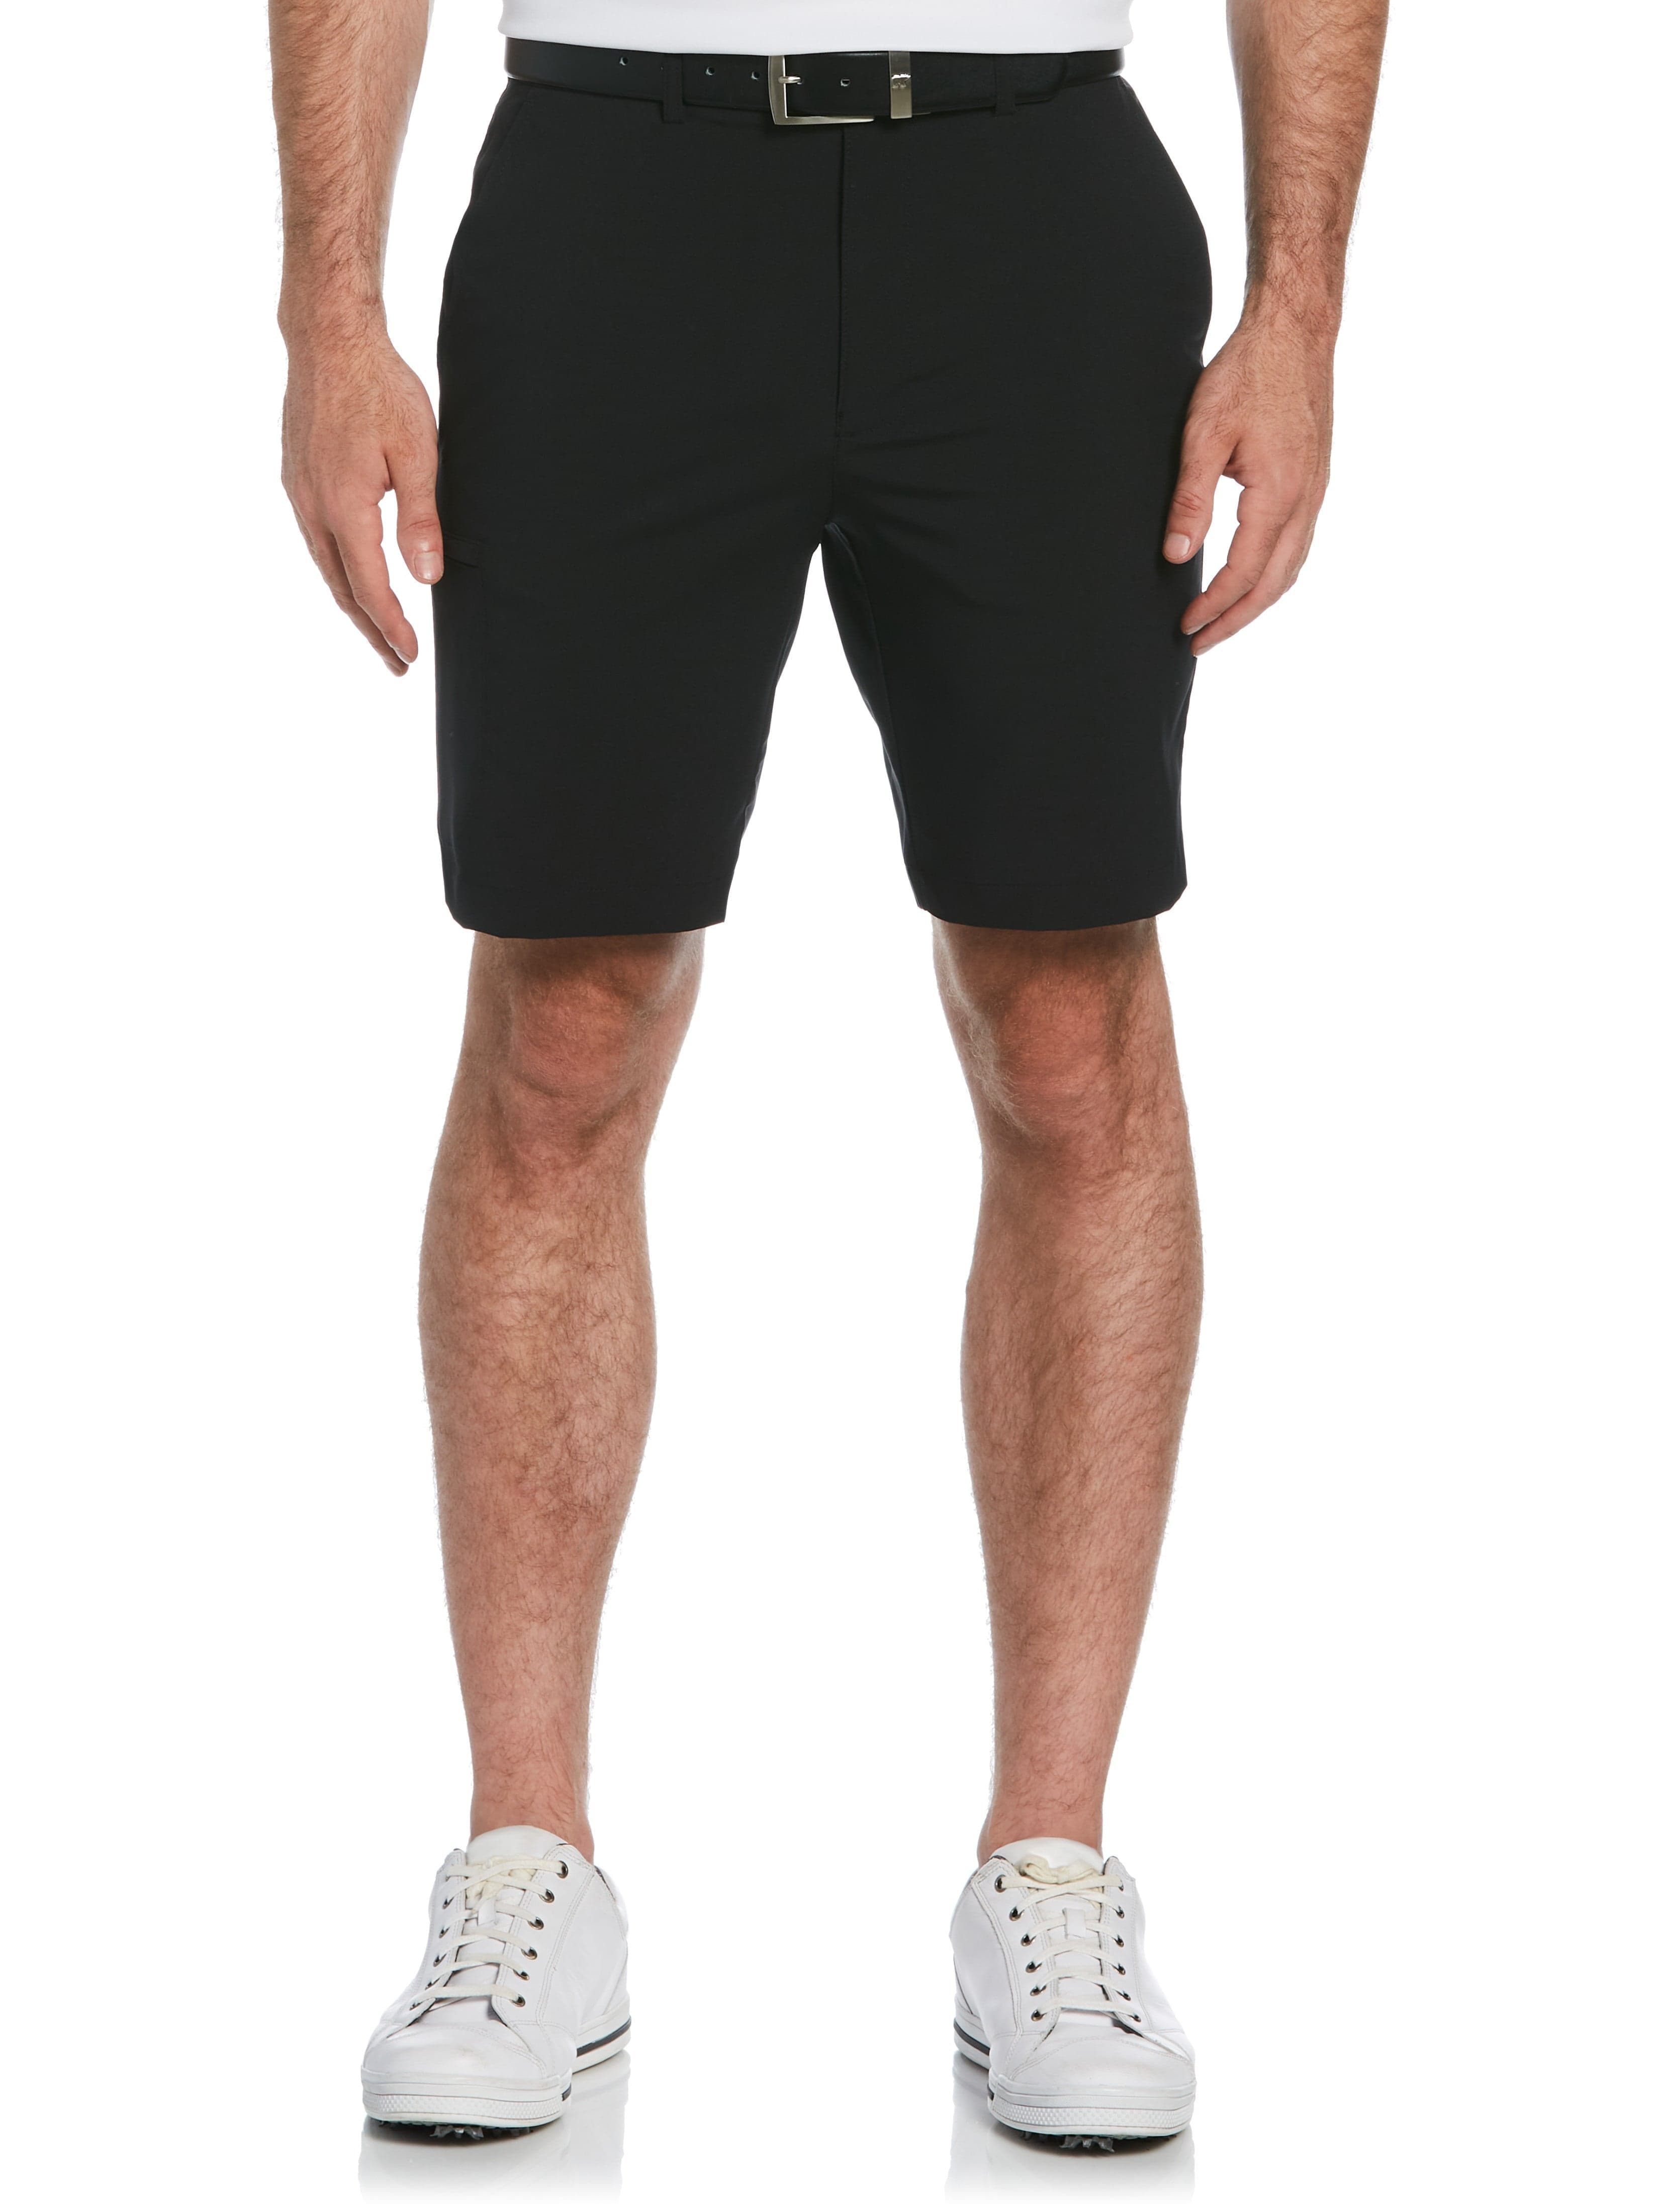 Jack Nicklaus Mens Flat Front Solid Golf Shorts w/ Cargo Pocket, Size 44, Black, 100% Polyester | Golf Apparel Shop